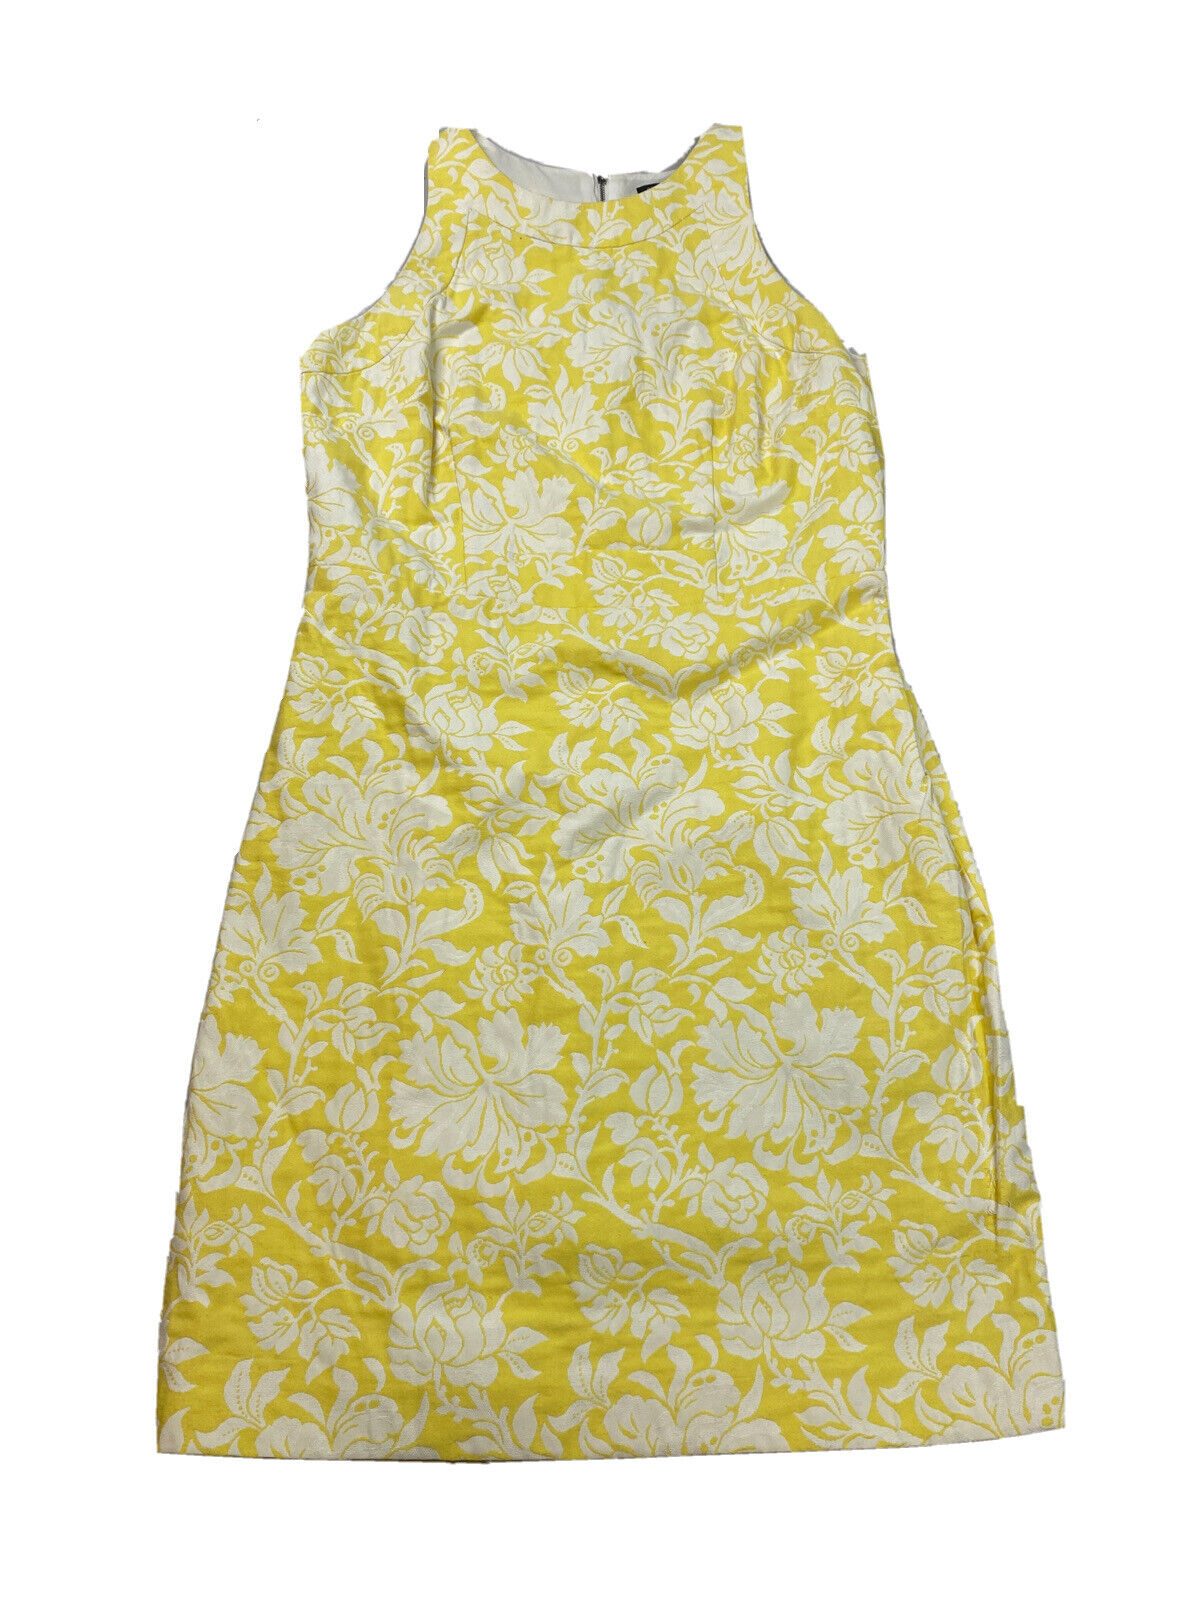 Ann Taylor Women's Yellow Sleeveless Floral Shift Dress - Petite 8P